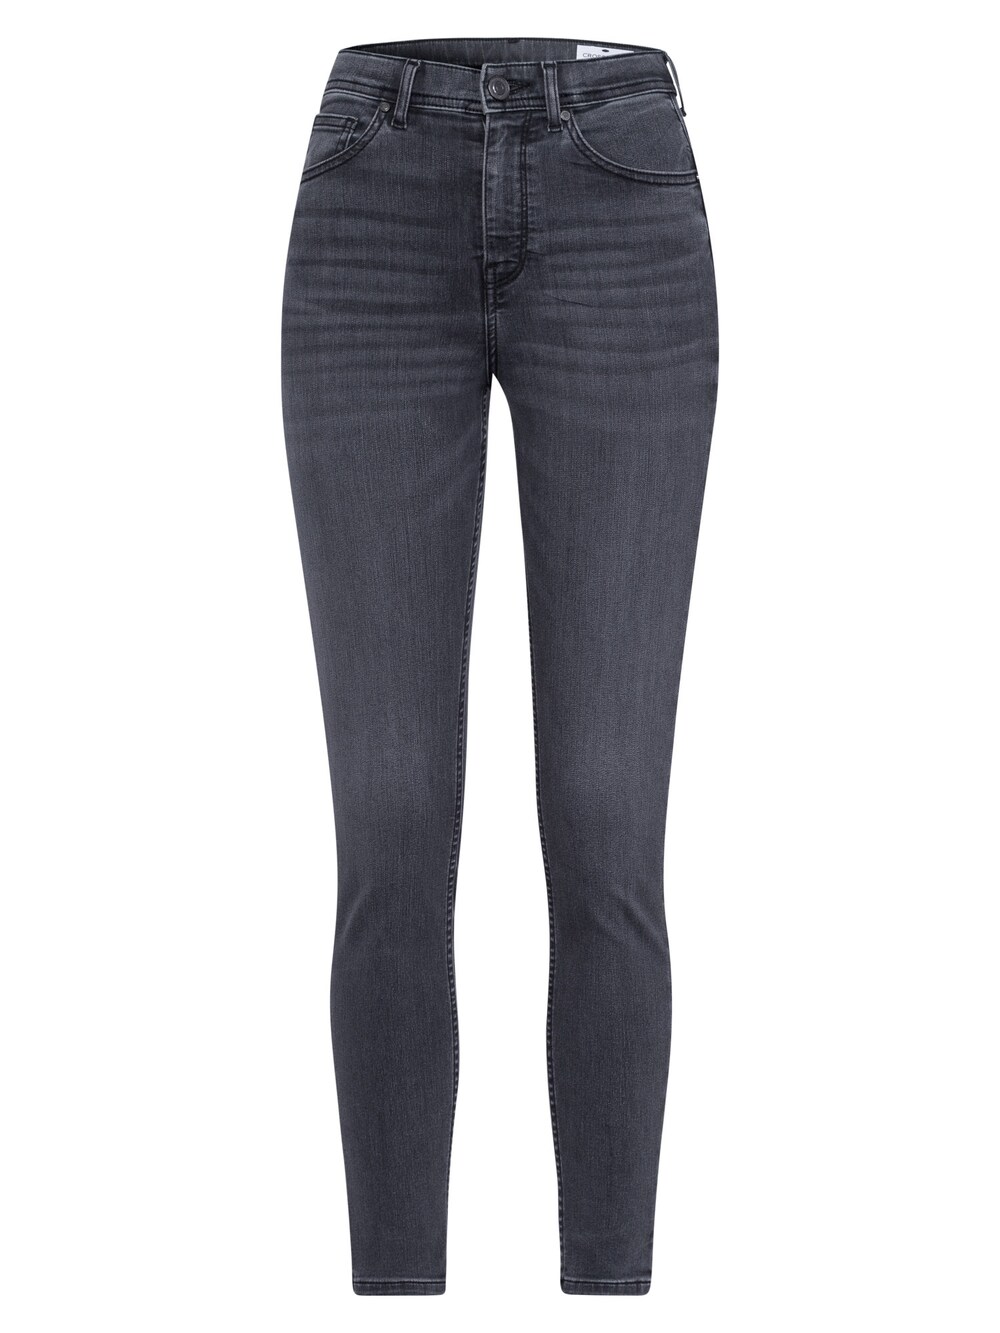 Узкие джинсы Cross Jeans, серый